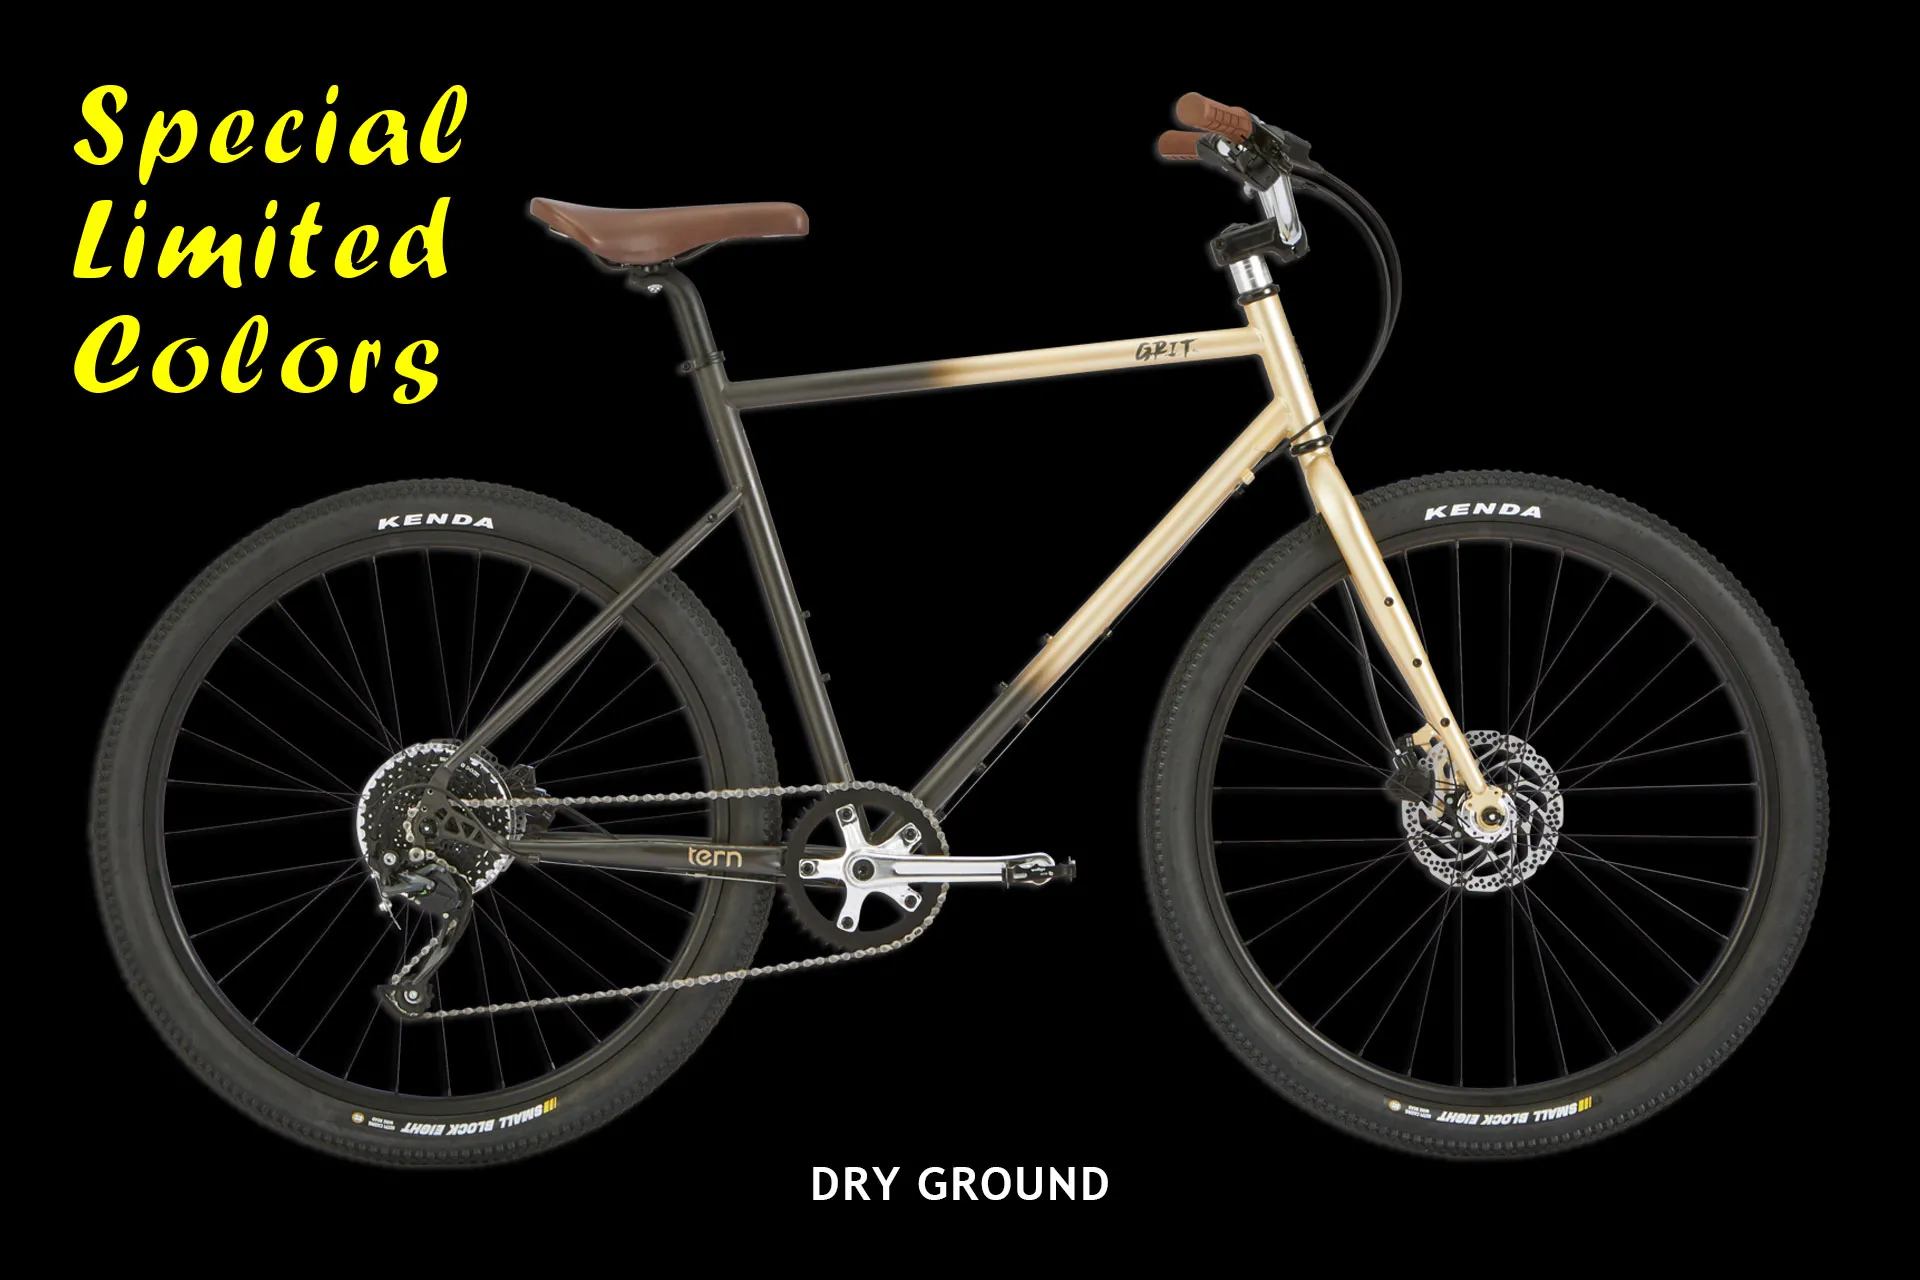 GRIT | Tern Bicycles